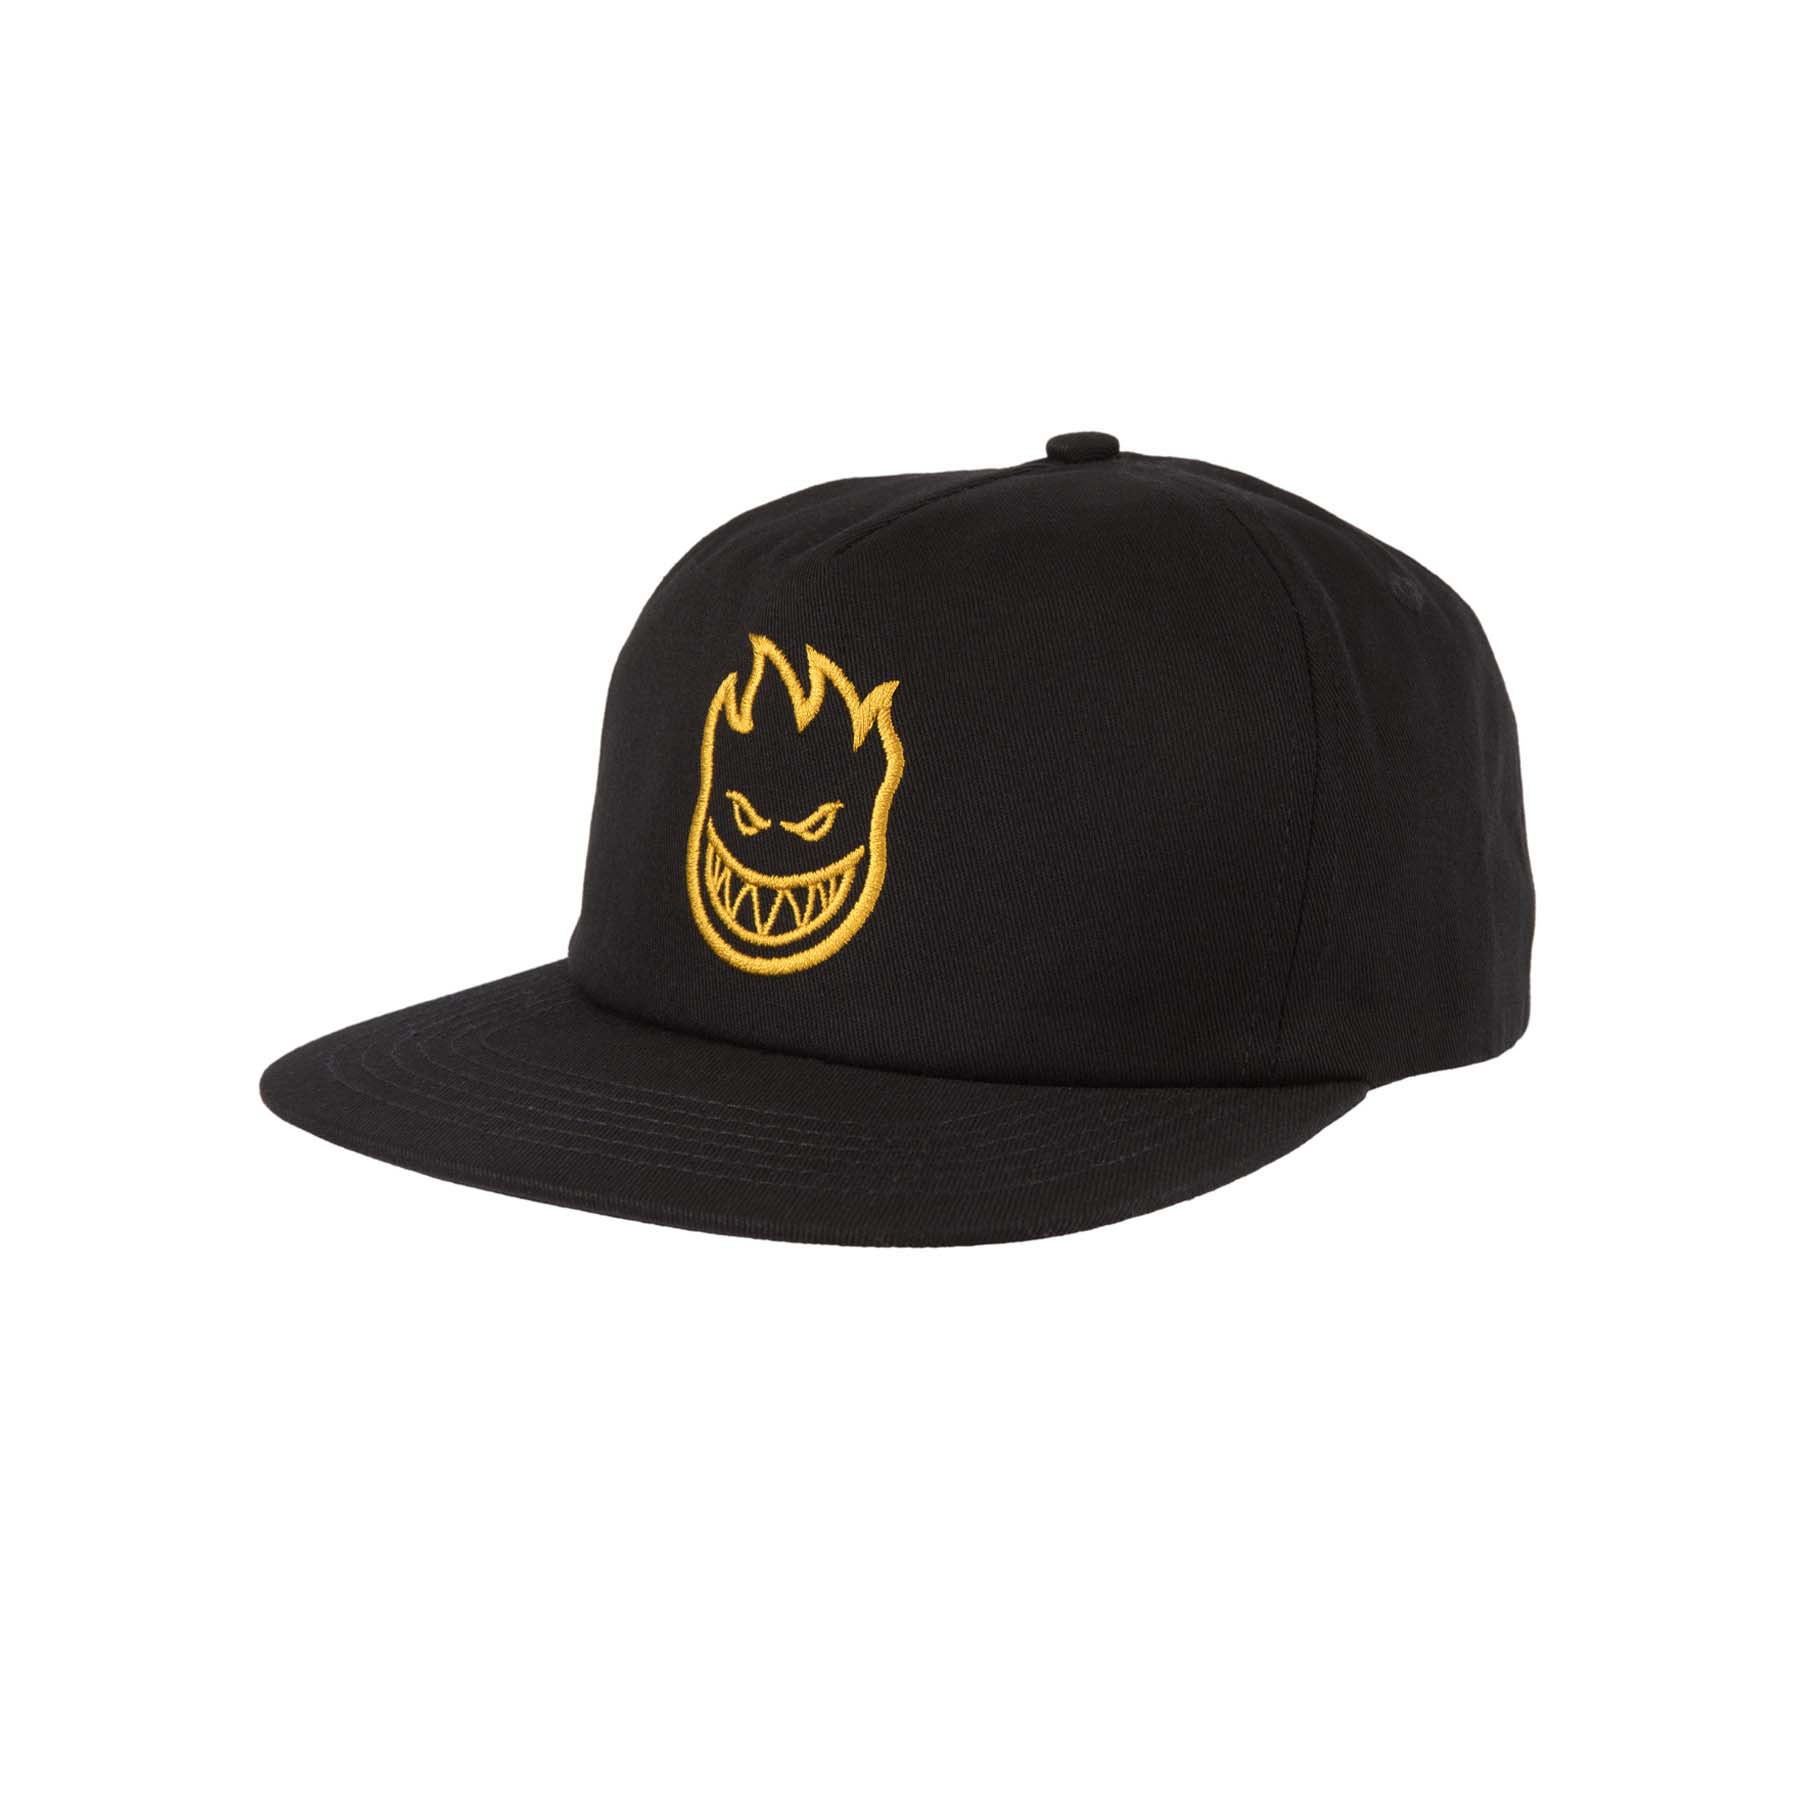 SPITFIRE Lil Bighead adjustable cap - Black/Gold